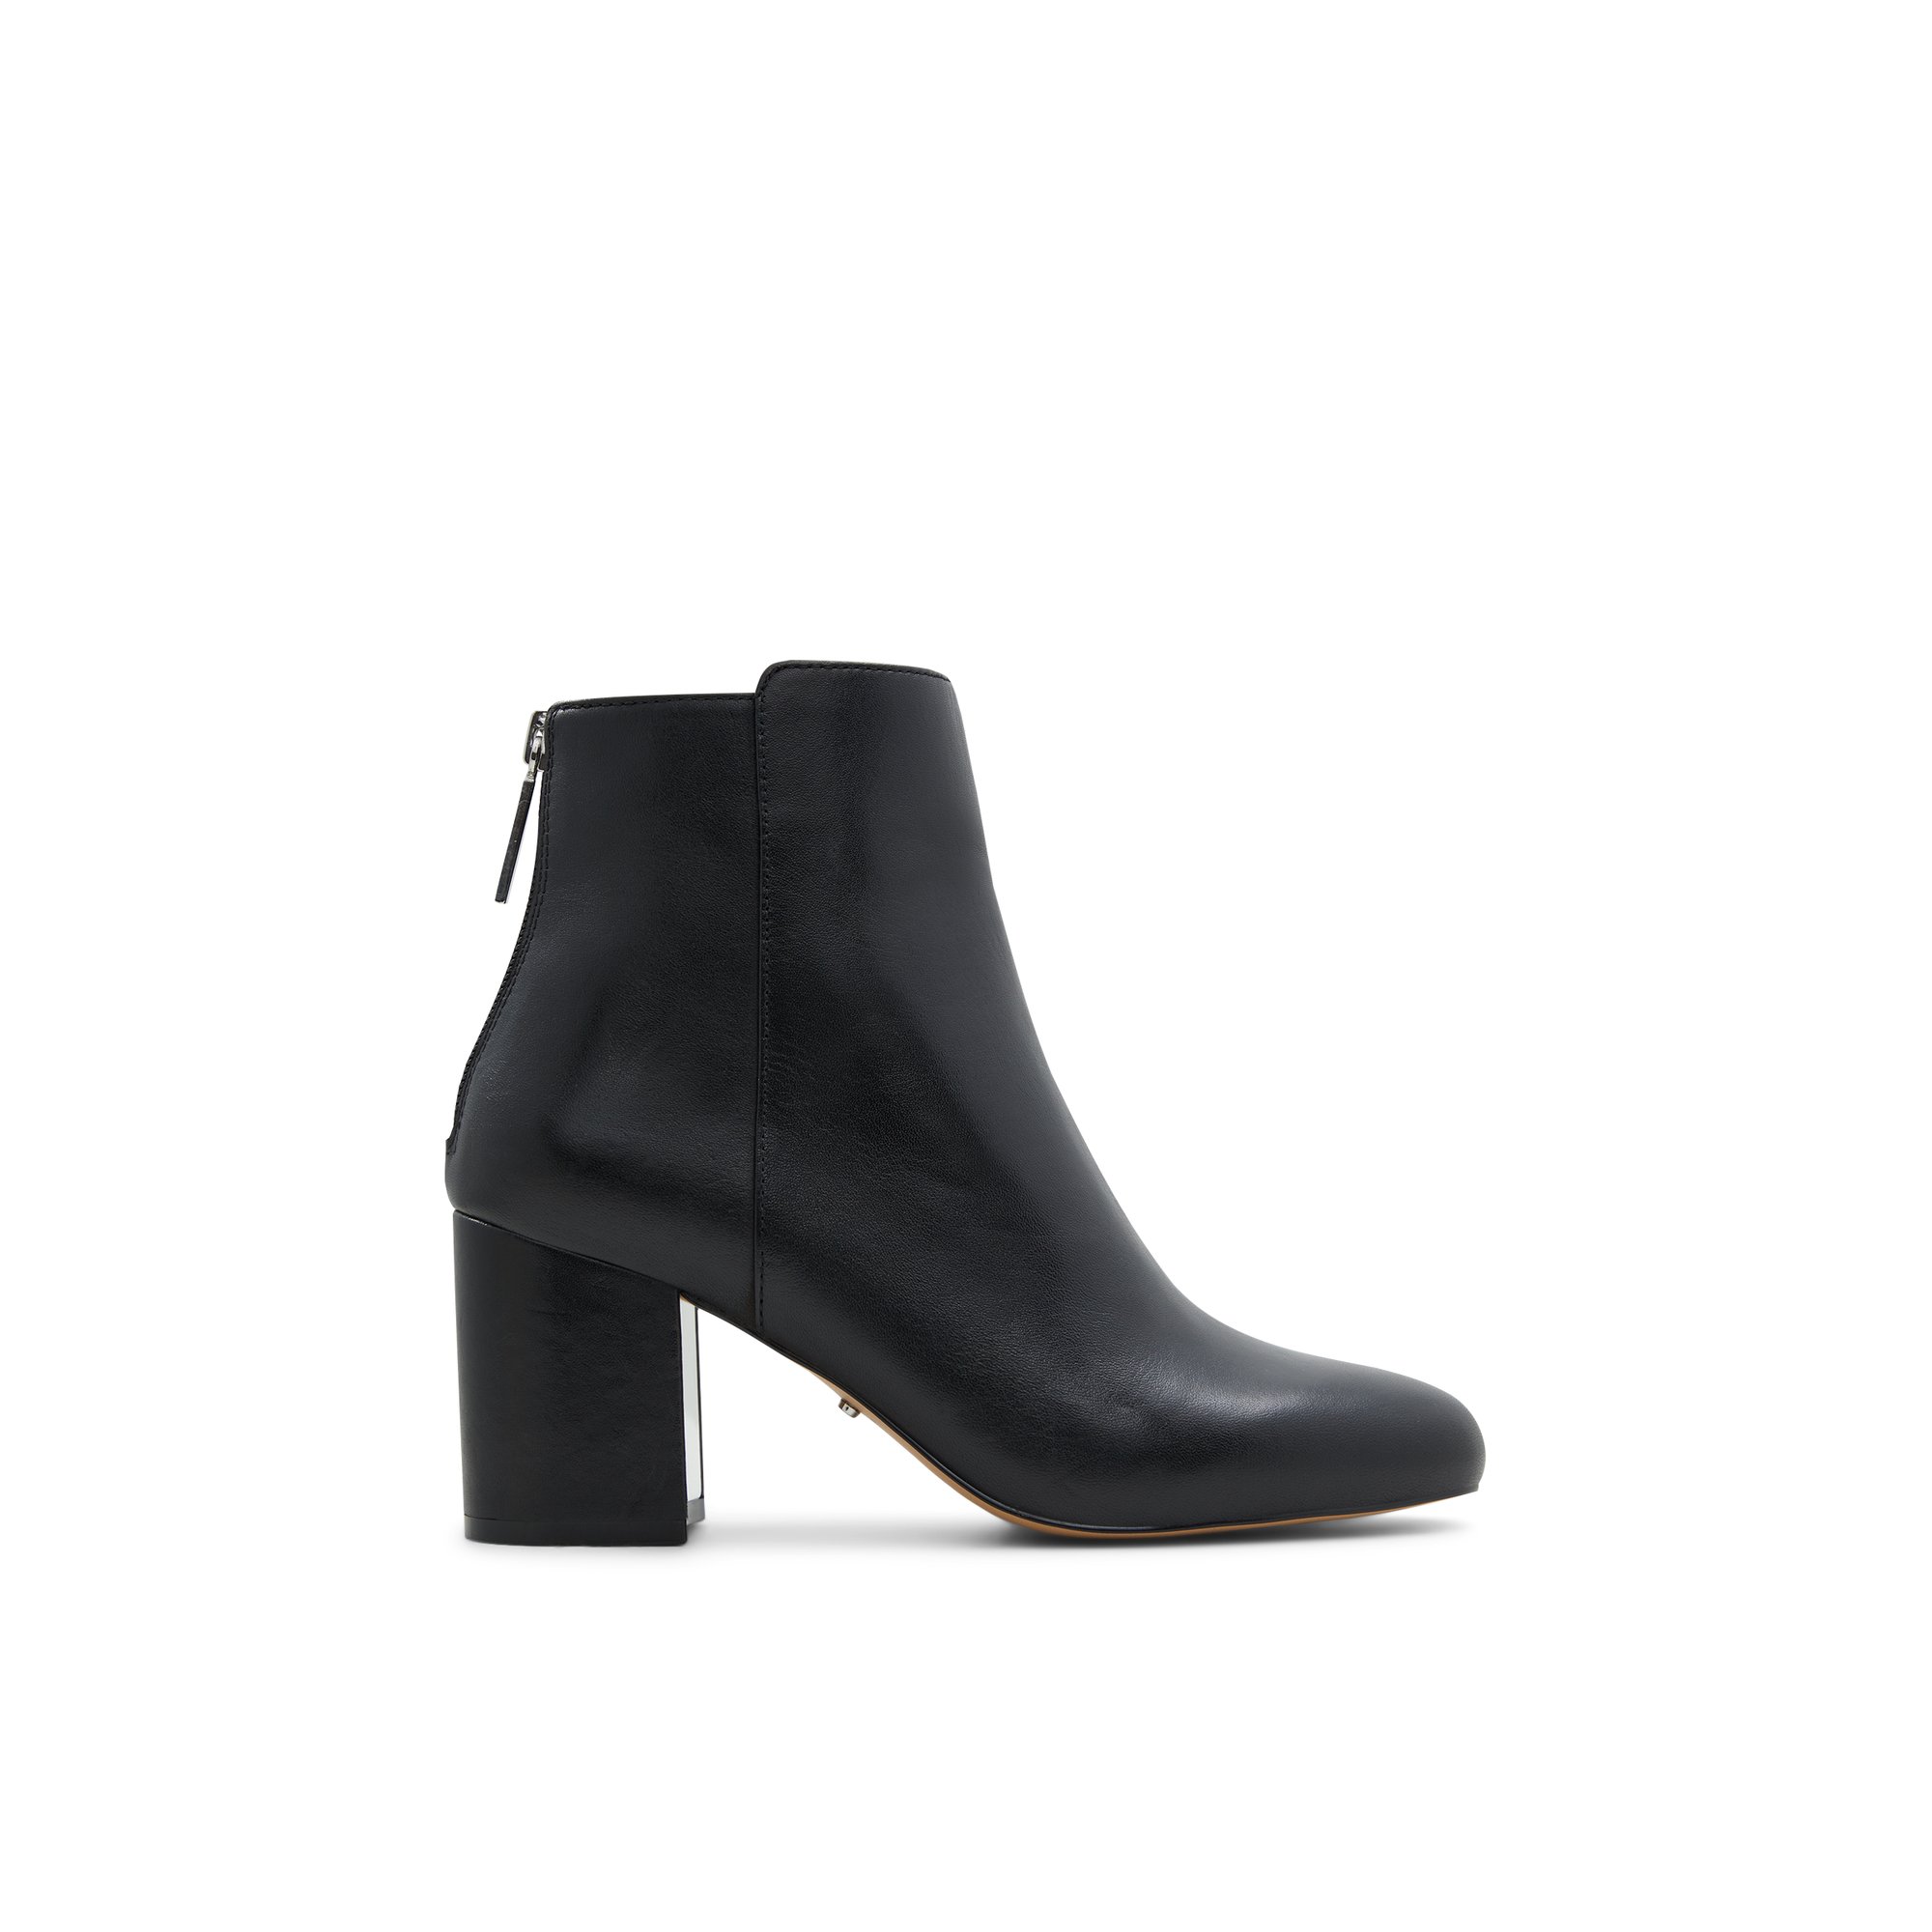 ALDO Priraveth - Women's Boots Ankle - Black